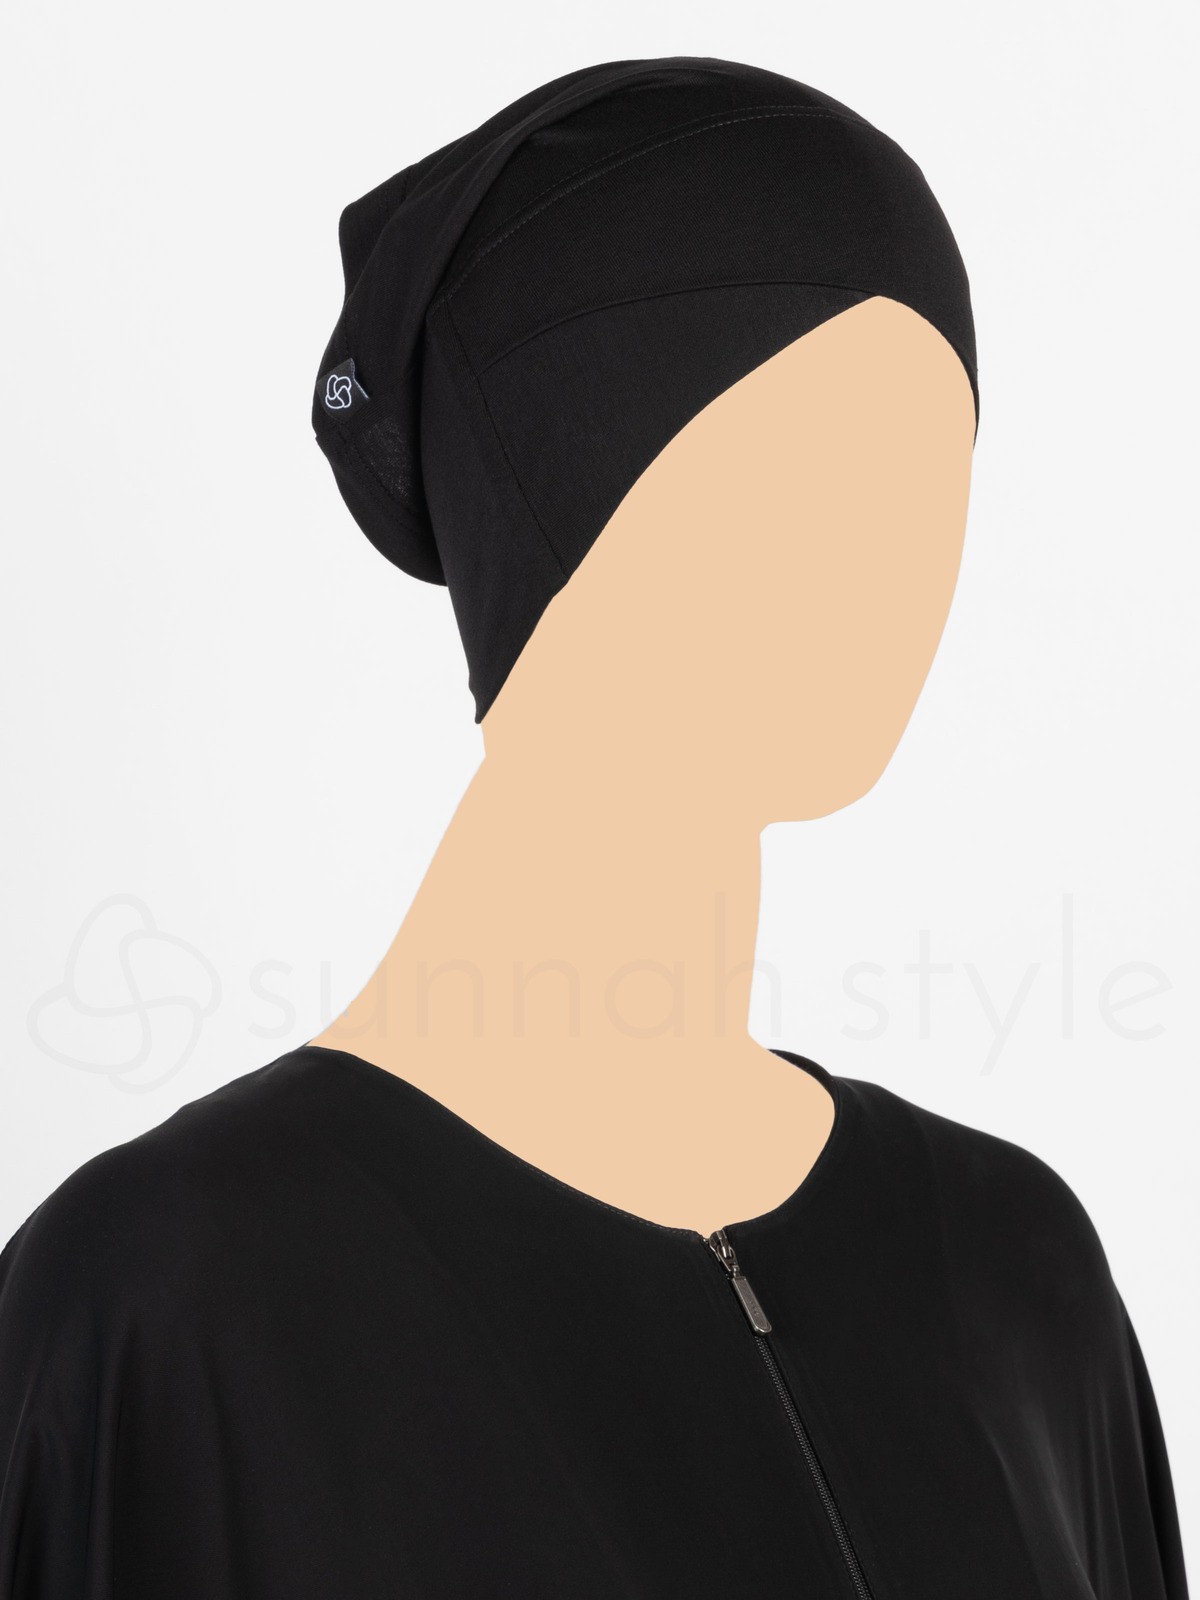 Sunnah Style - Crossover Underscarf (Black)